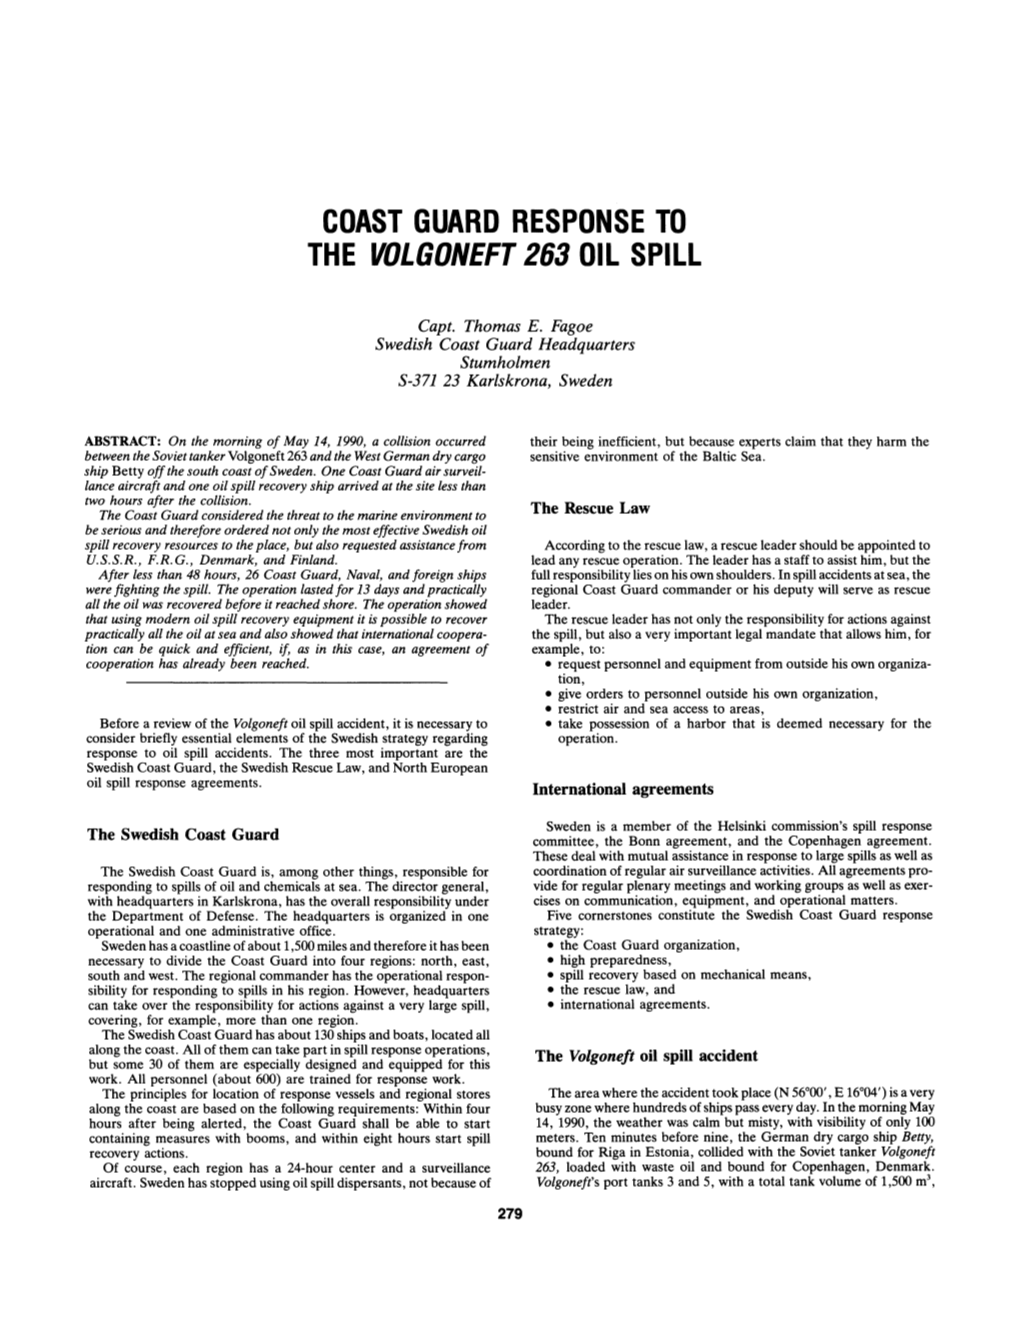 Coast Guard Response to the V0lg0neft263 Oil Spill